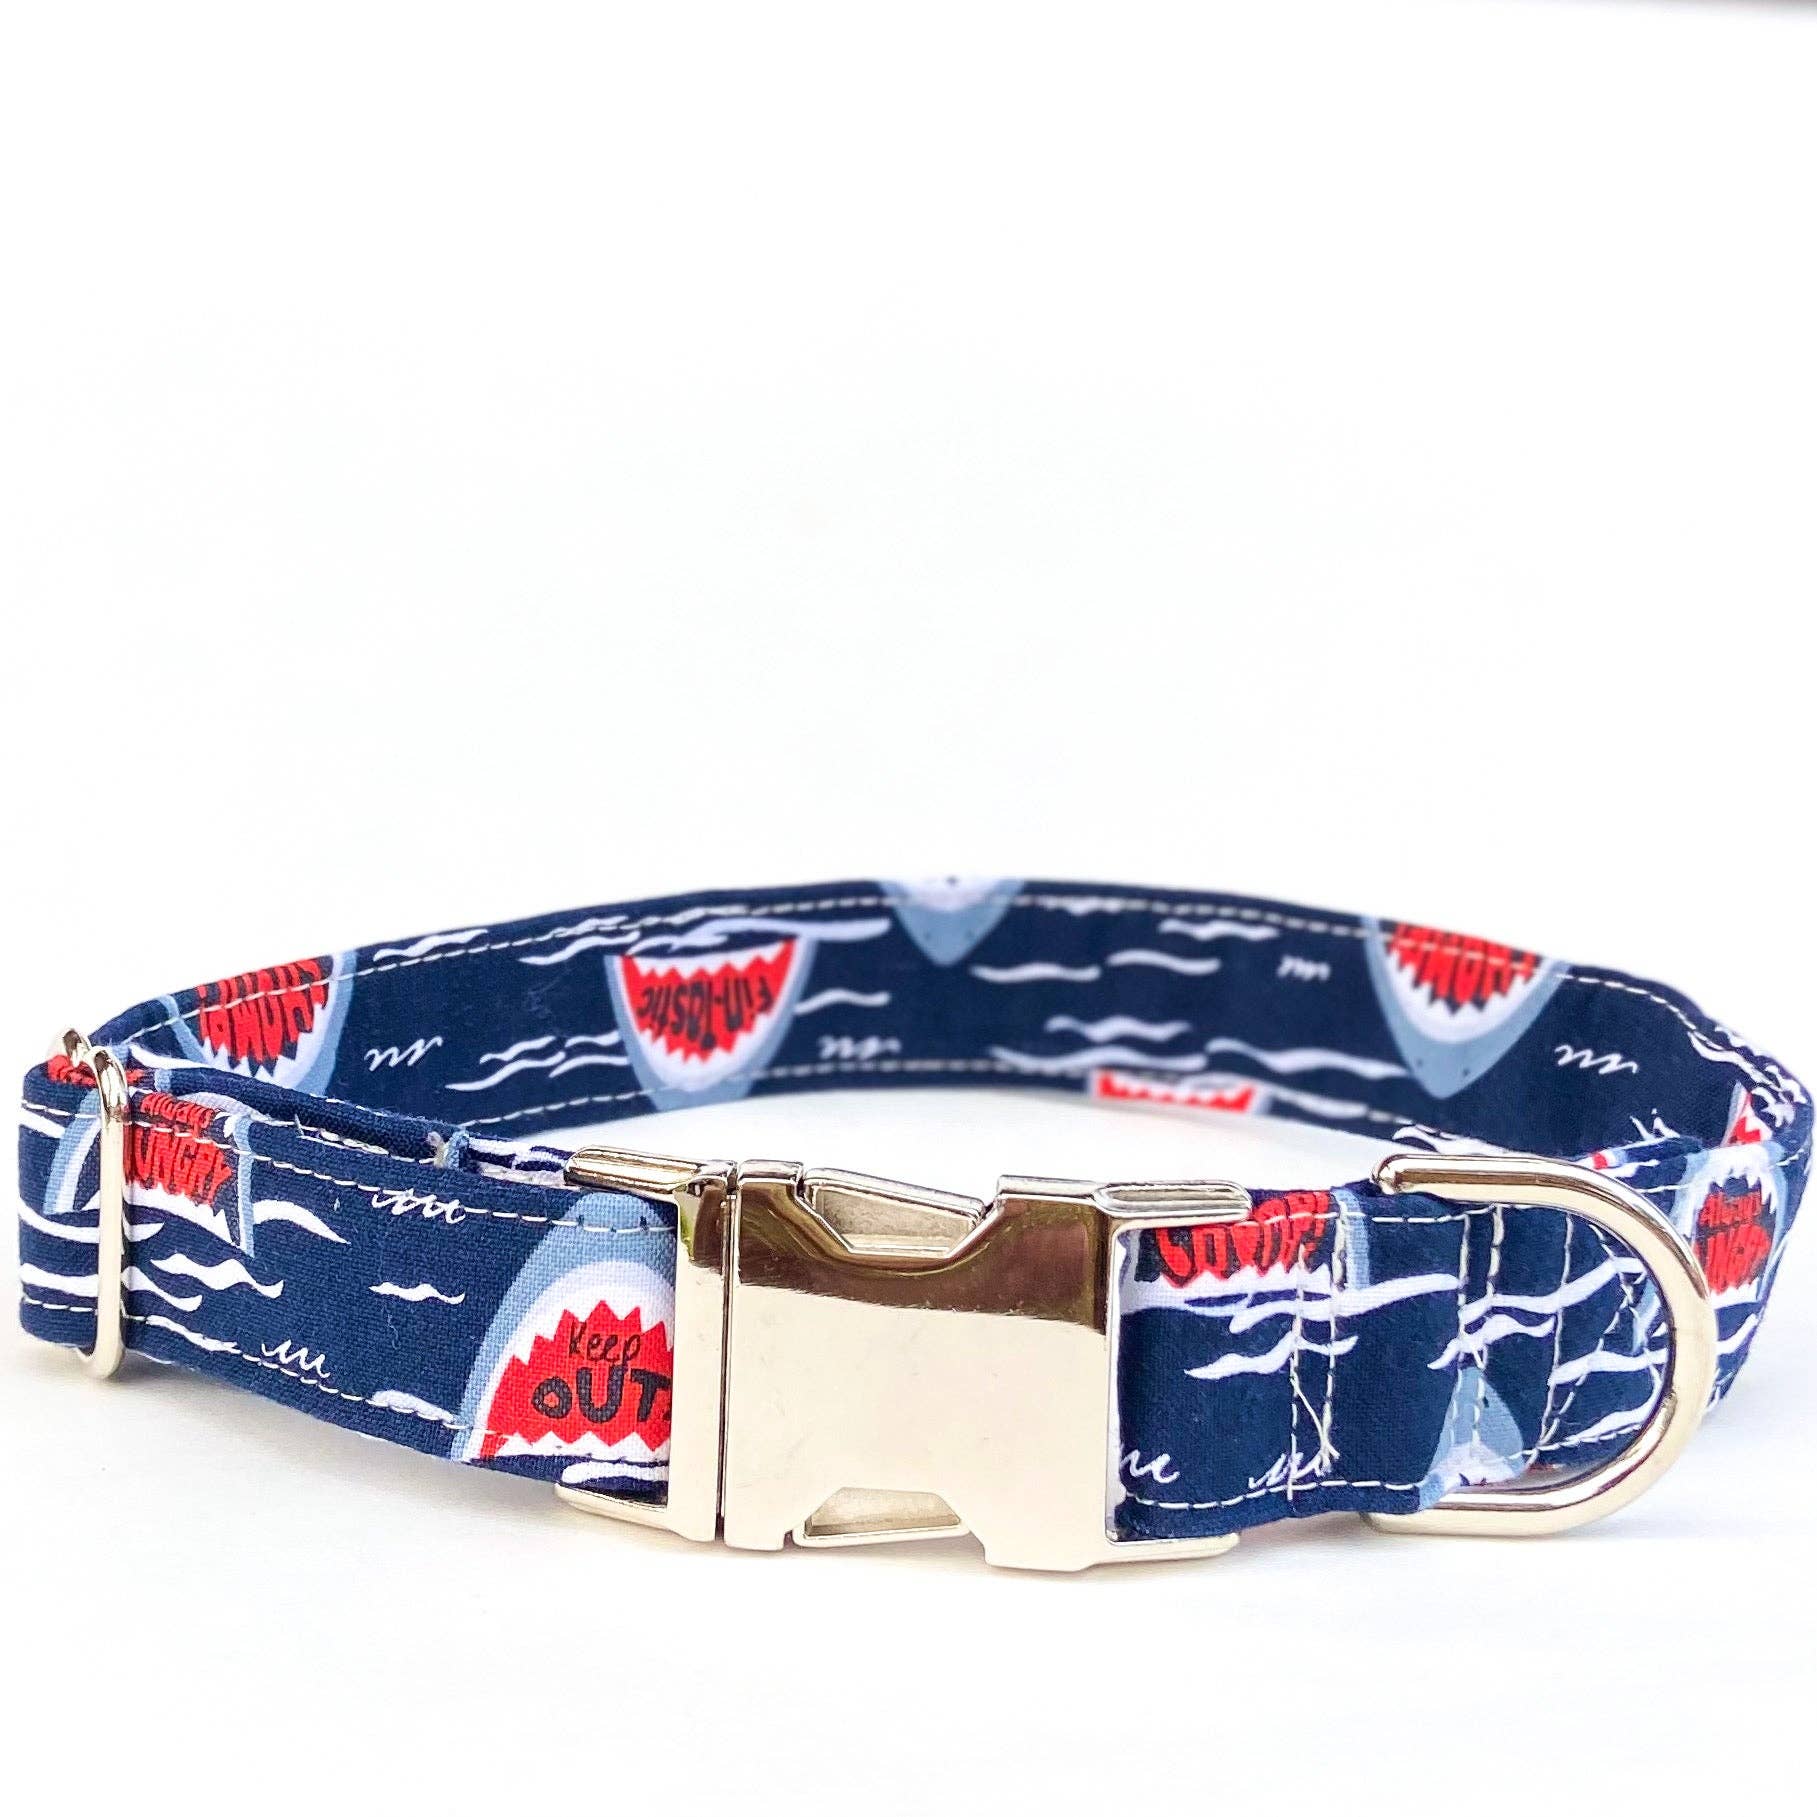 doggish - Always hungry JAWS shark dog collar metal buckle